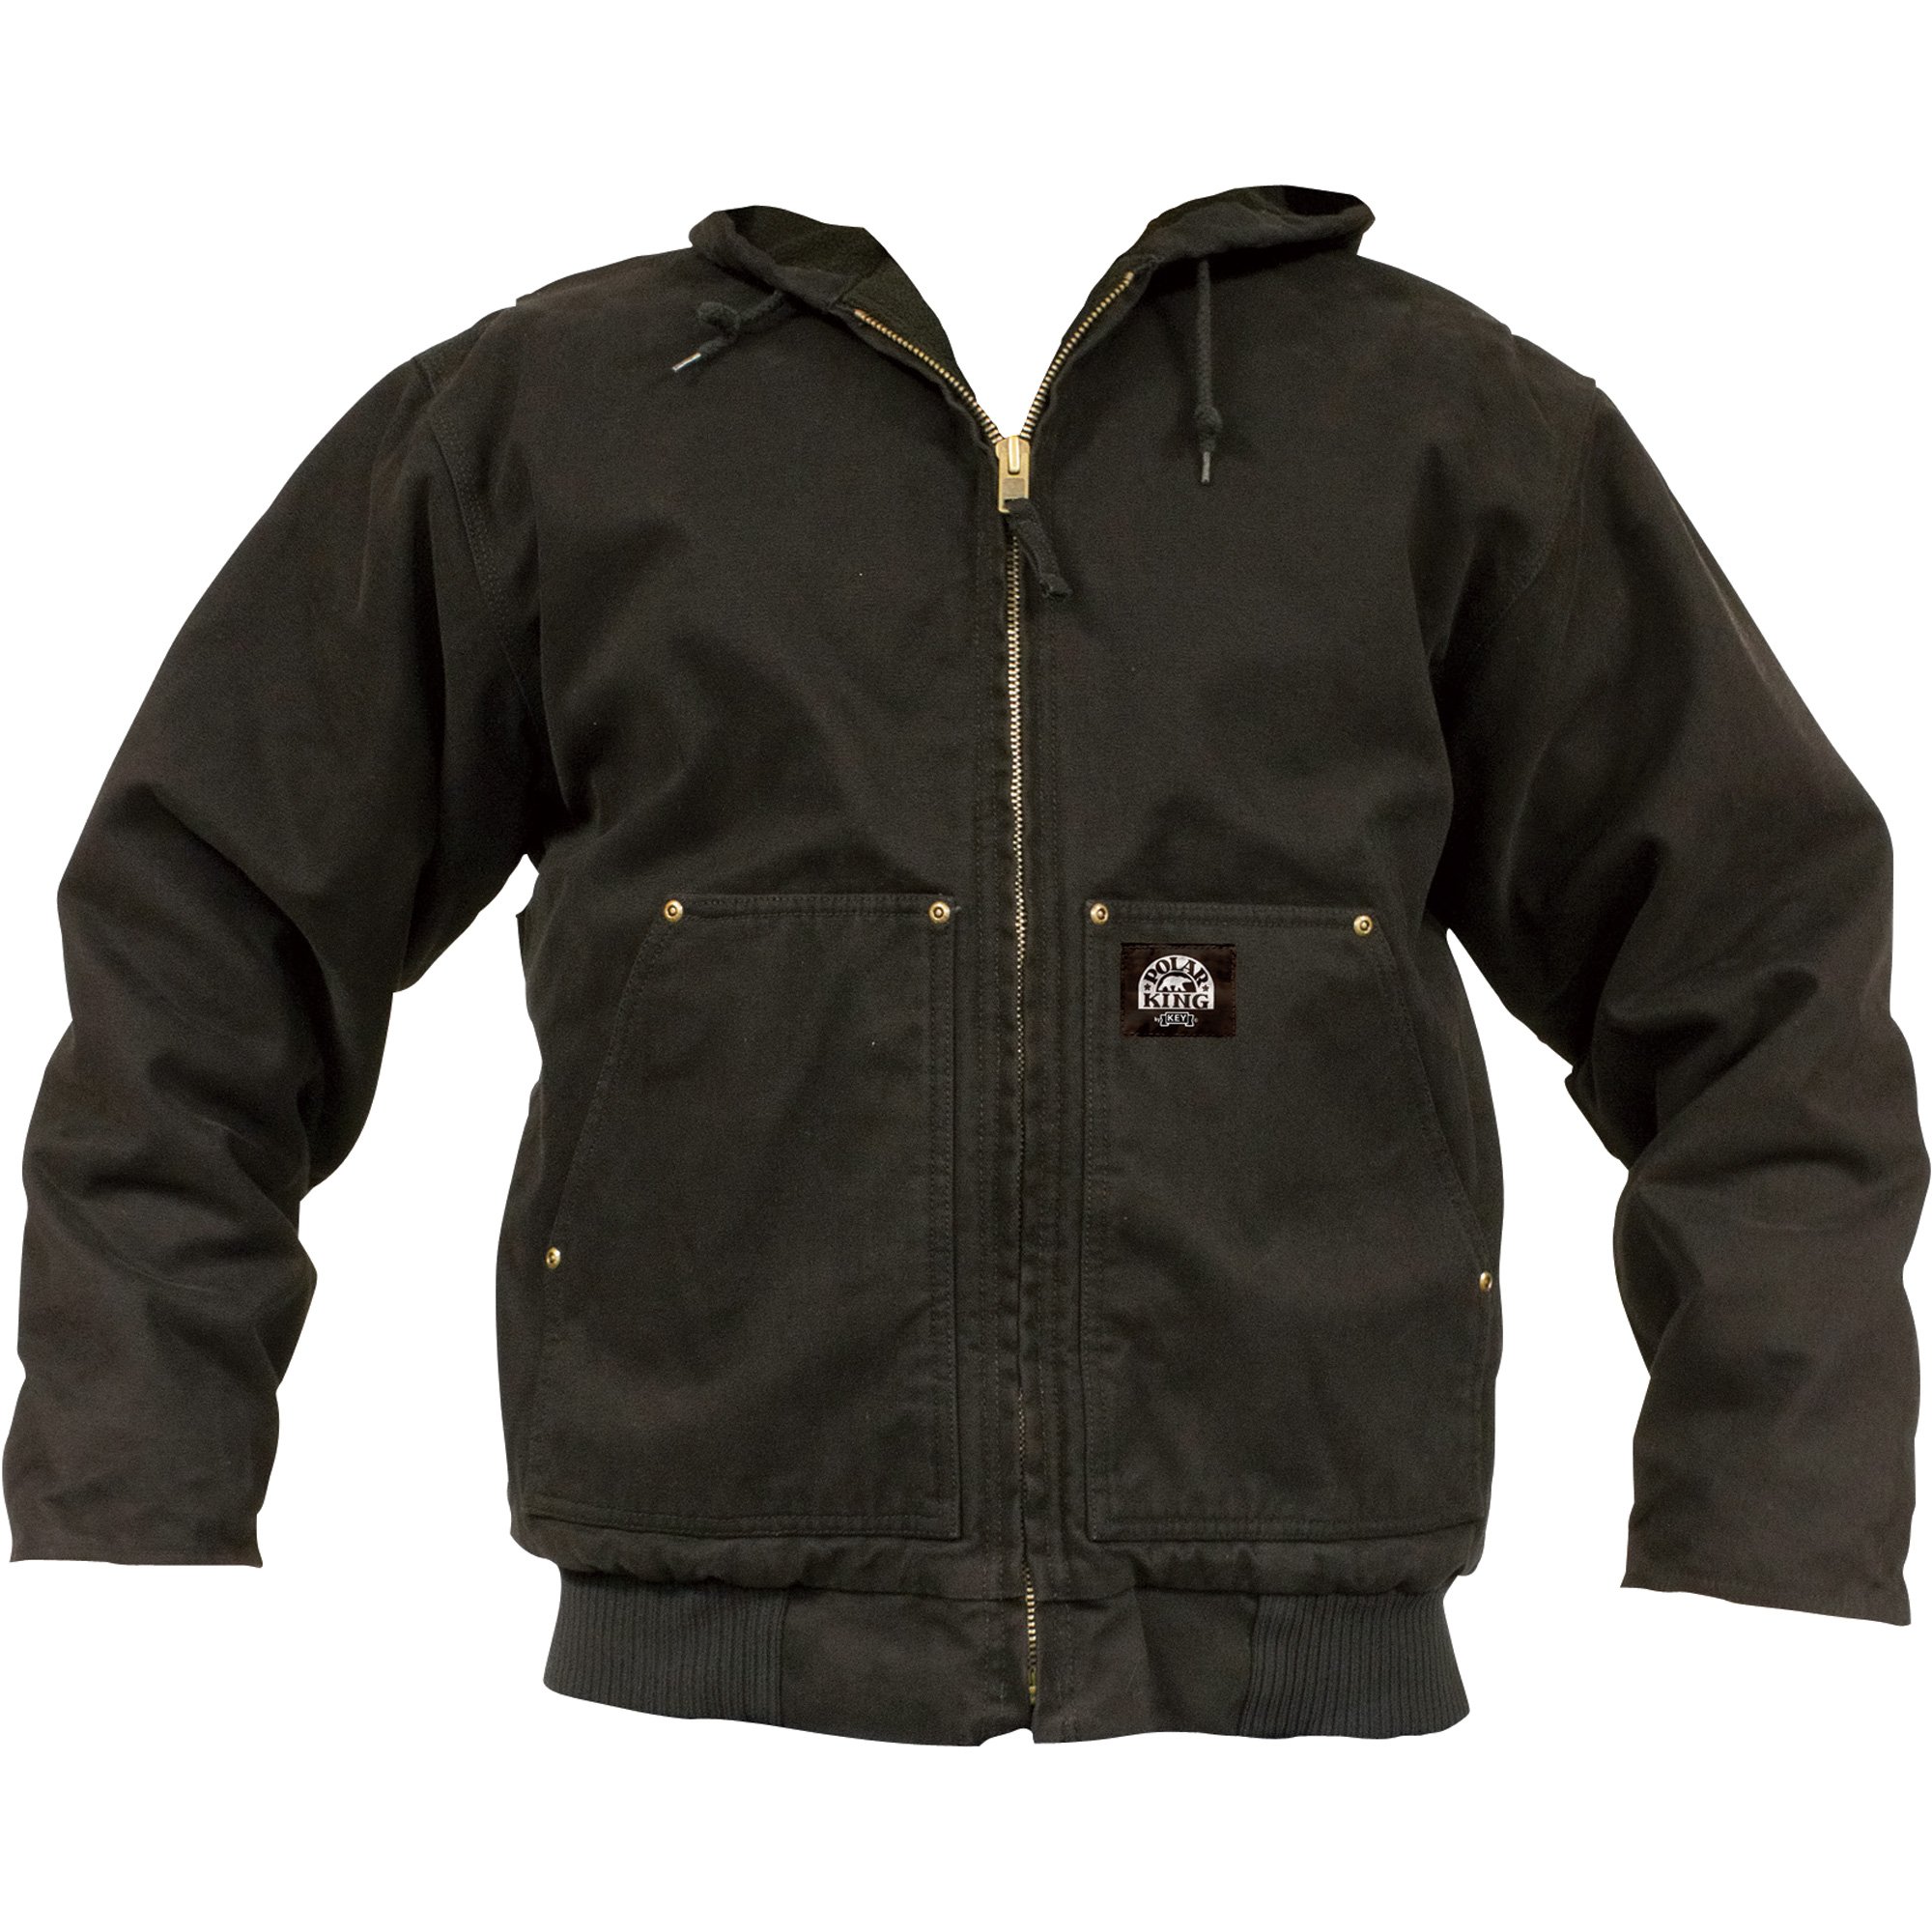 Polar King Insulated Fleece-Lined Hooded Jacket — Black, Medium, Model#  376.01